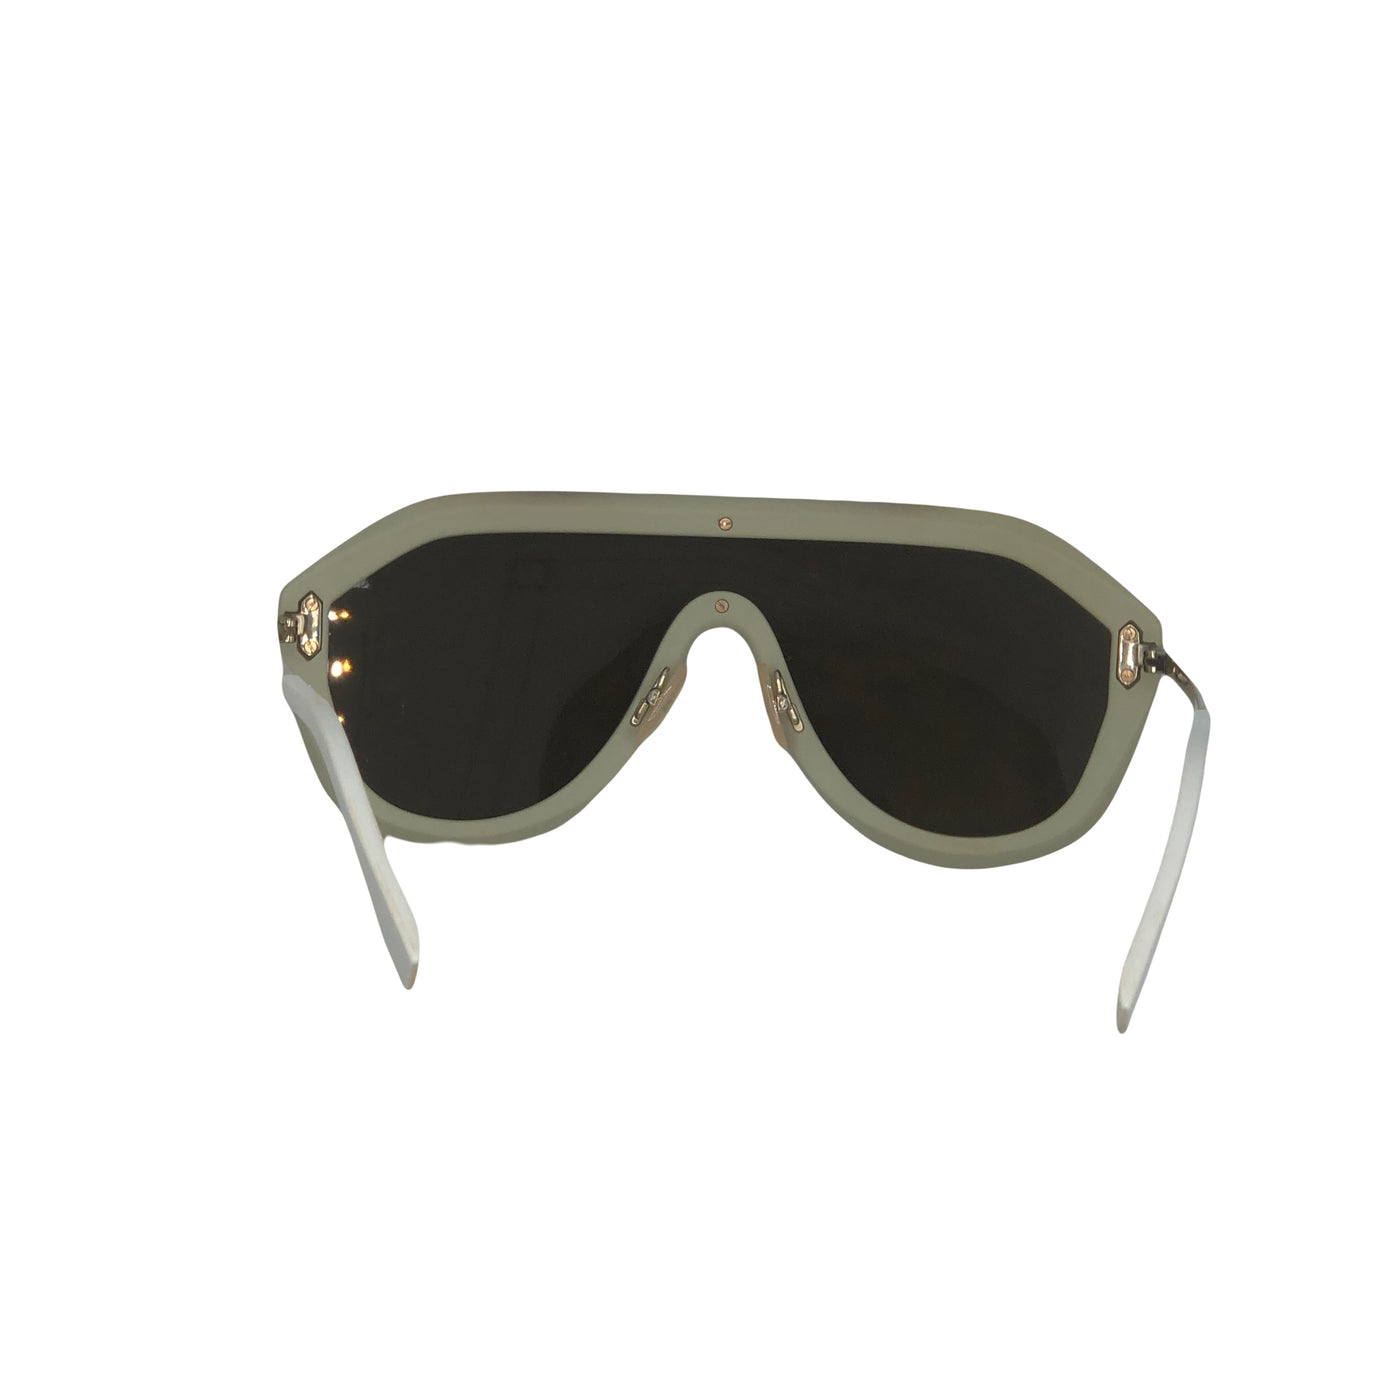 FENDI FF LOGO sunglasses new in case with tag